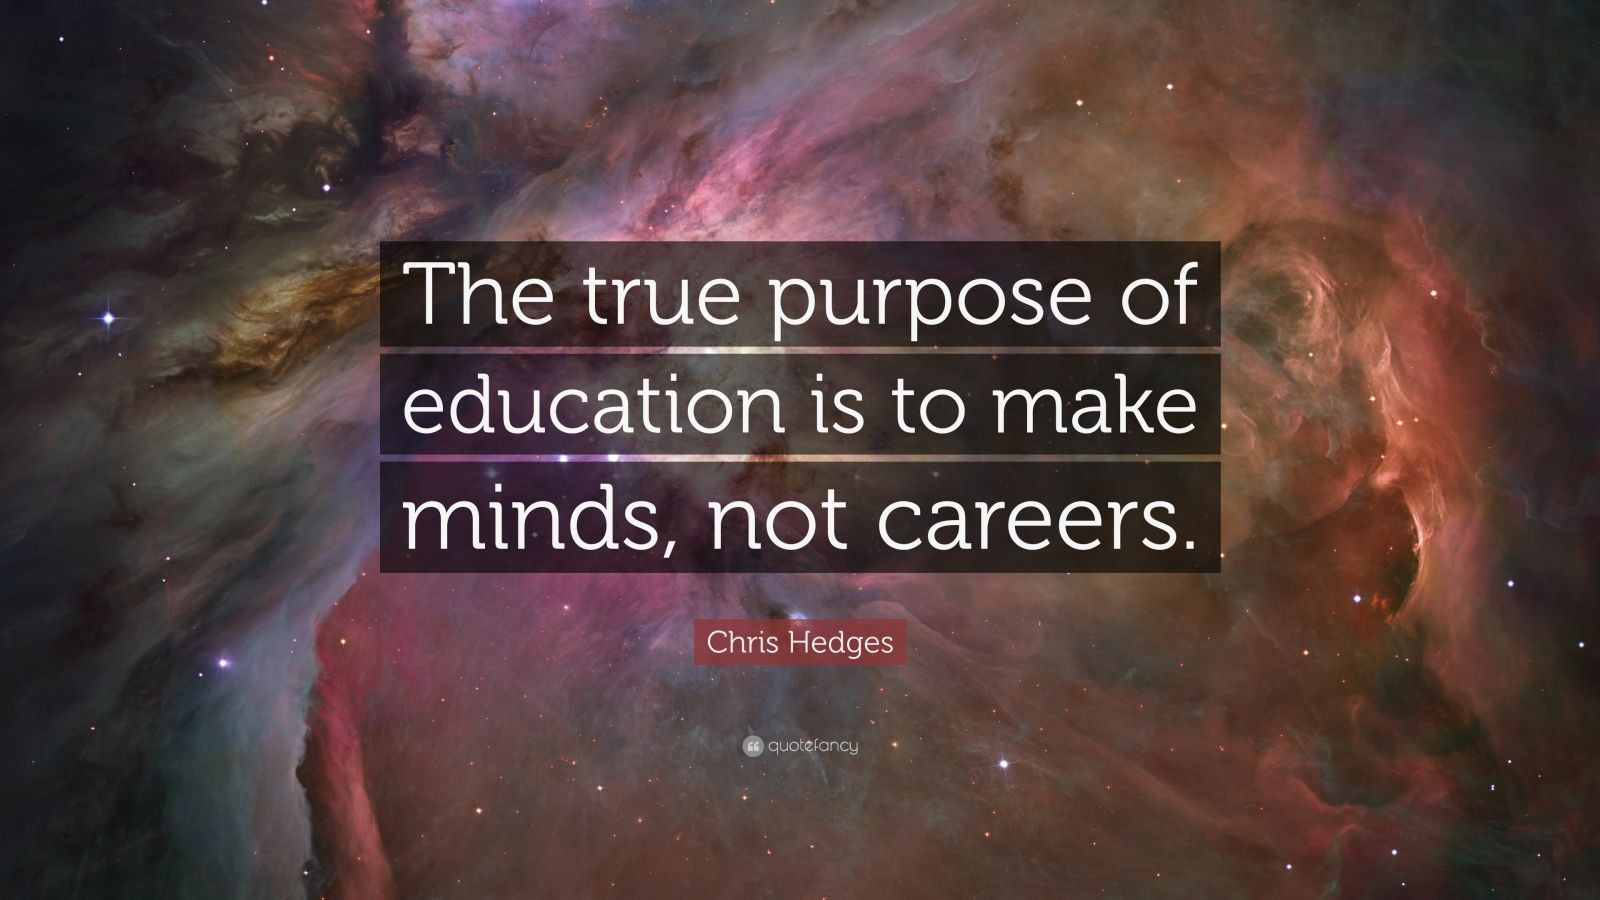 Purpose Of Education Quote
 Chris Hedges Quote “The true purpose of education is to